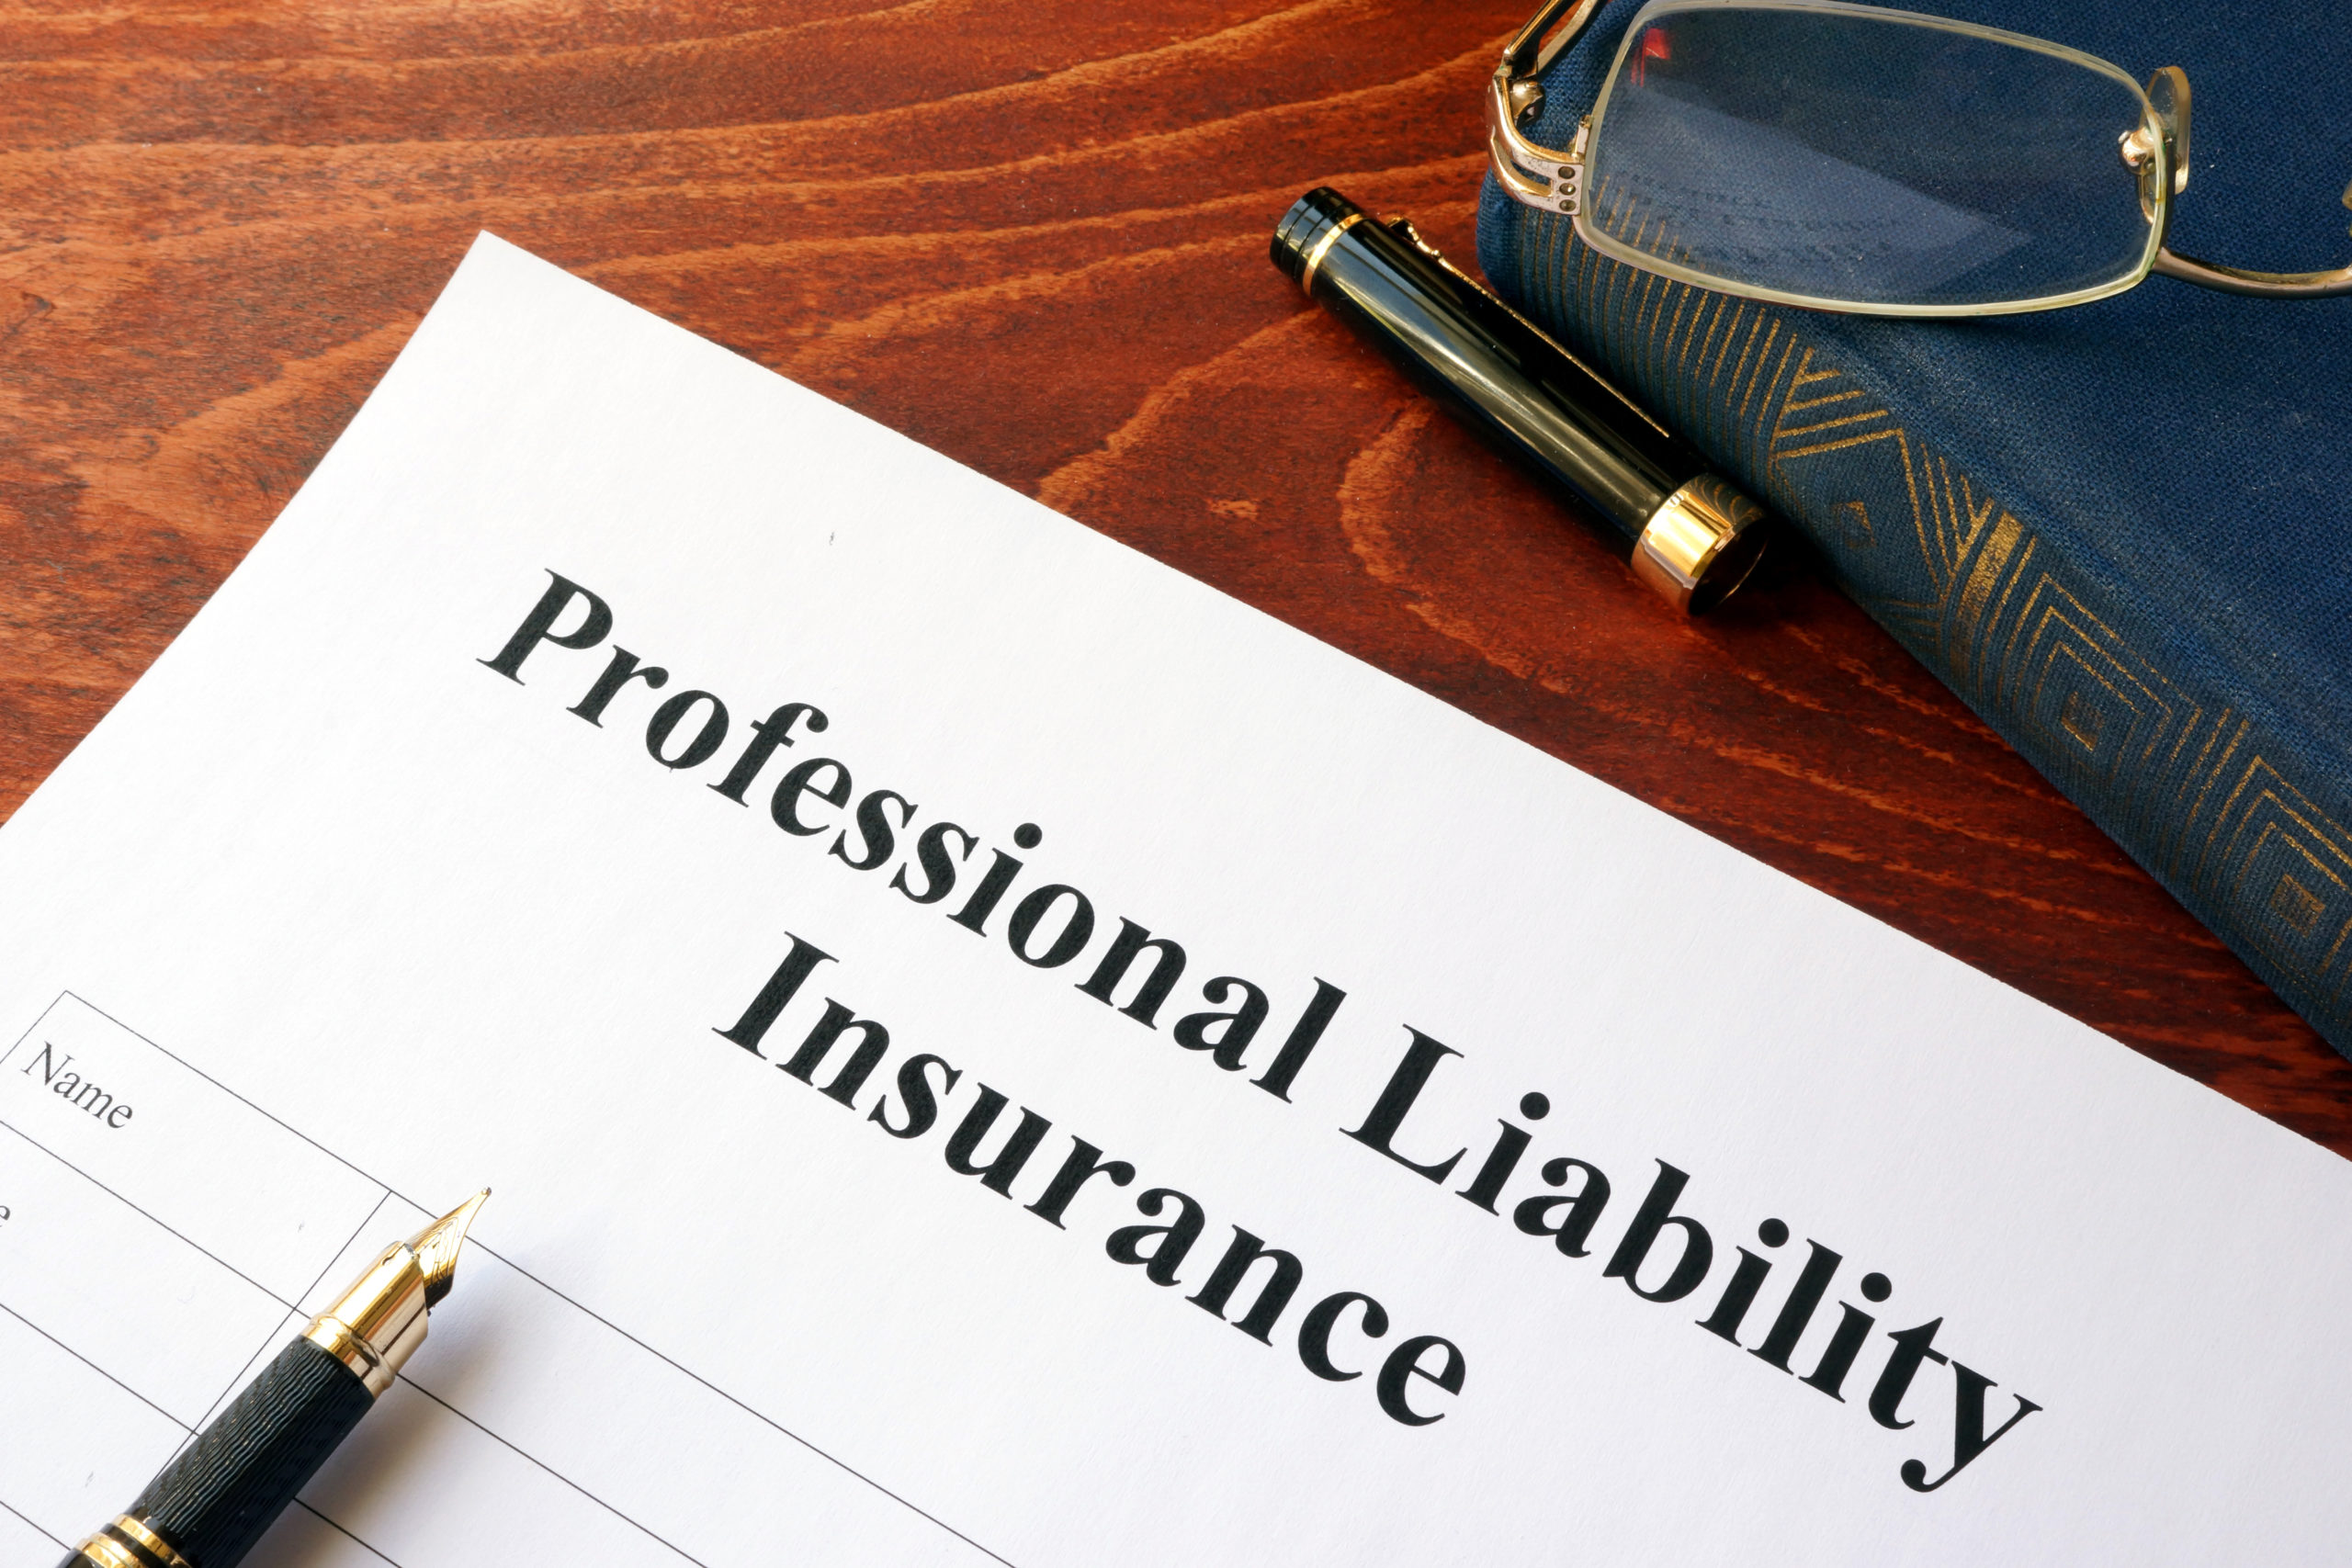 Professional Liability Insurance in Nova Scotia